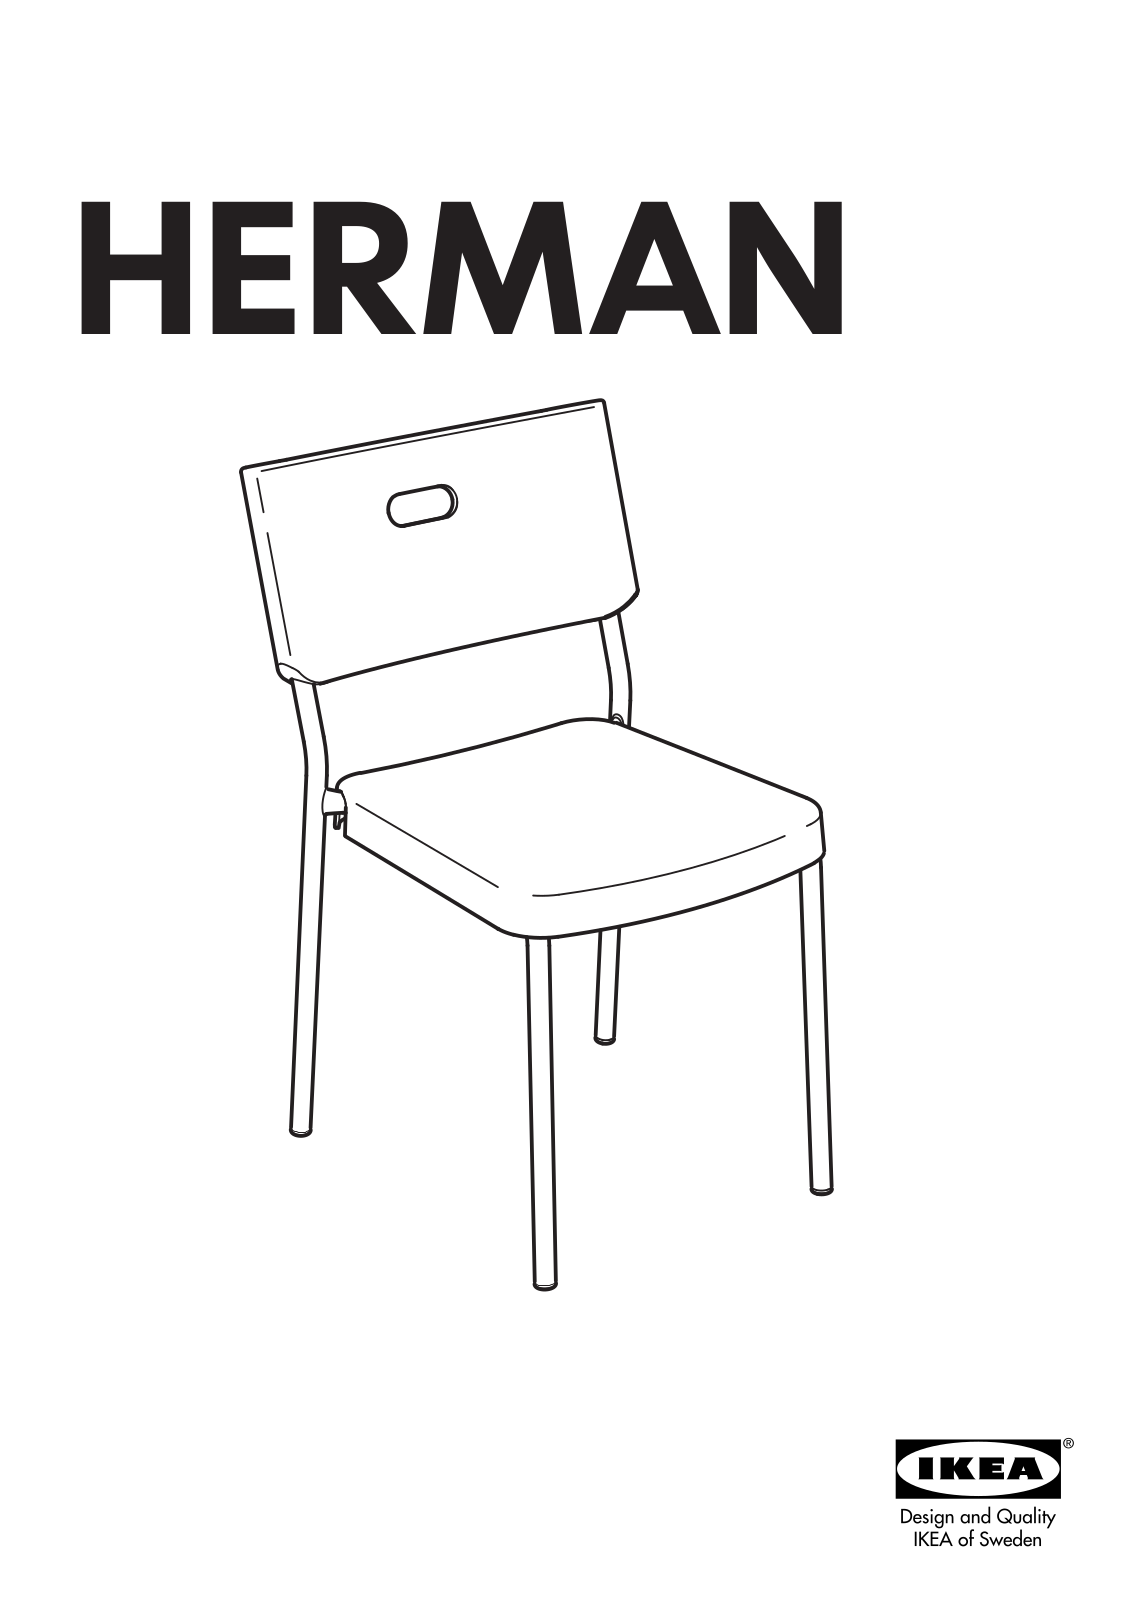 IKEA HERMAN User Manual